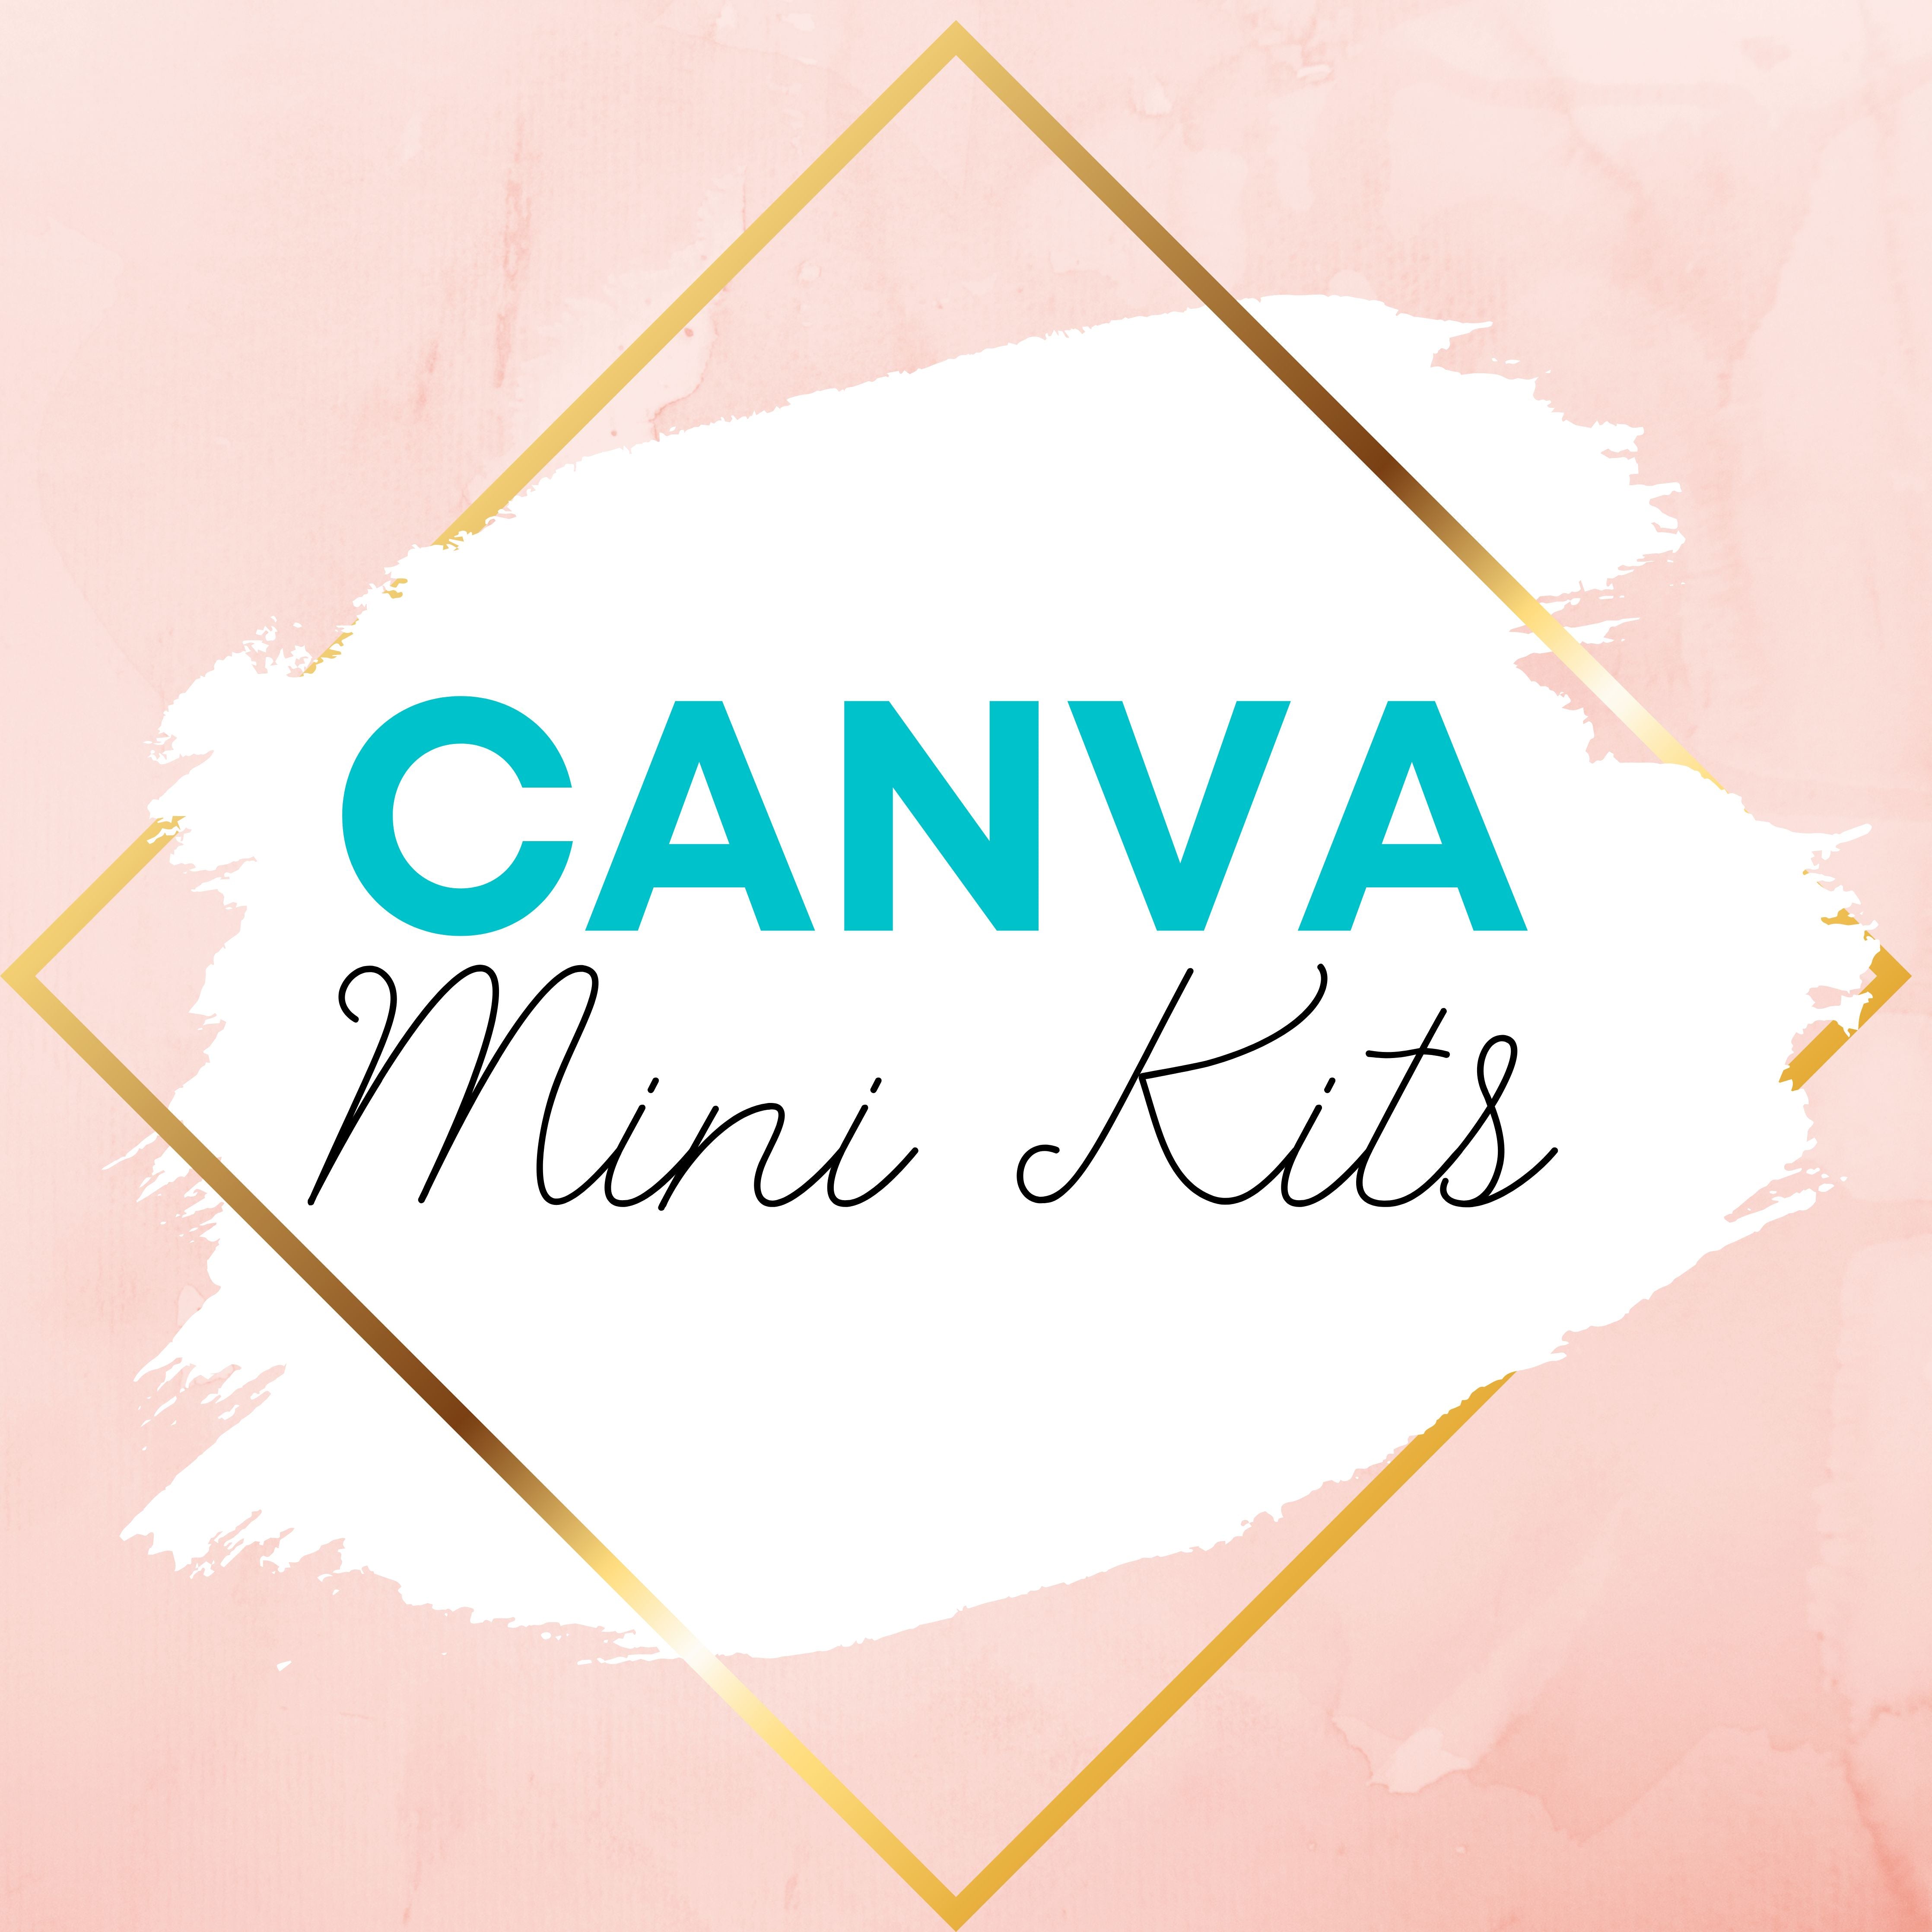 Canva Mini Kits